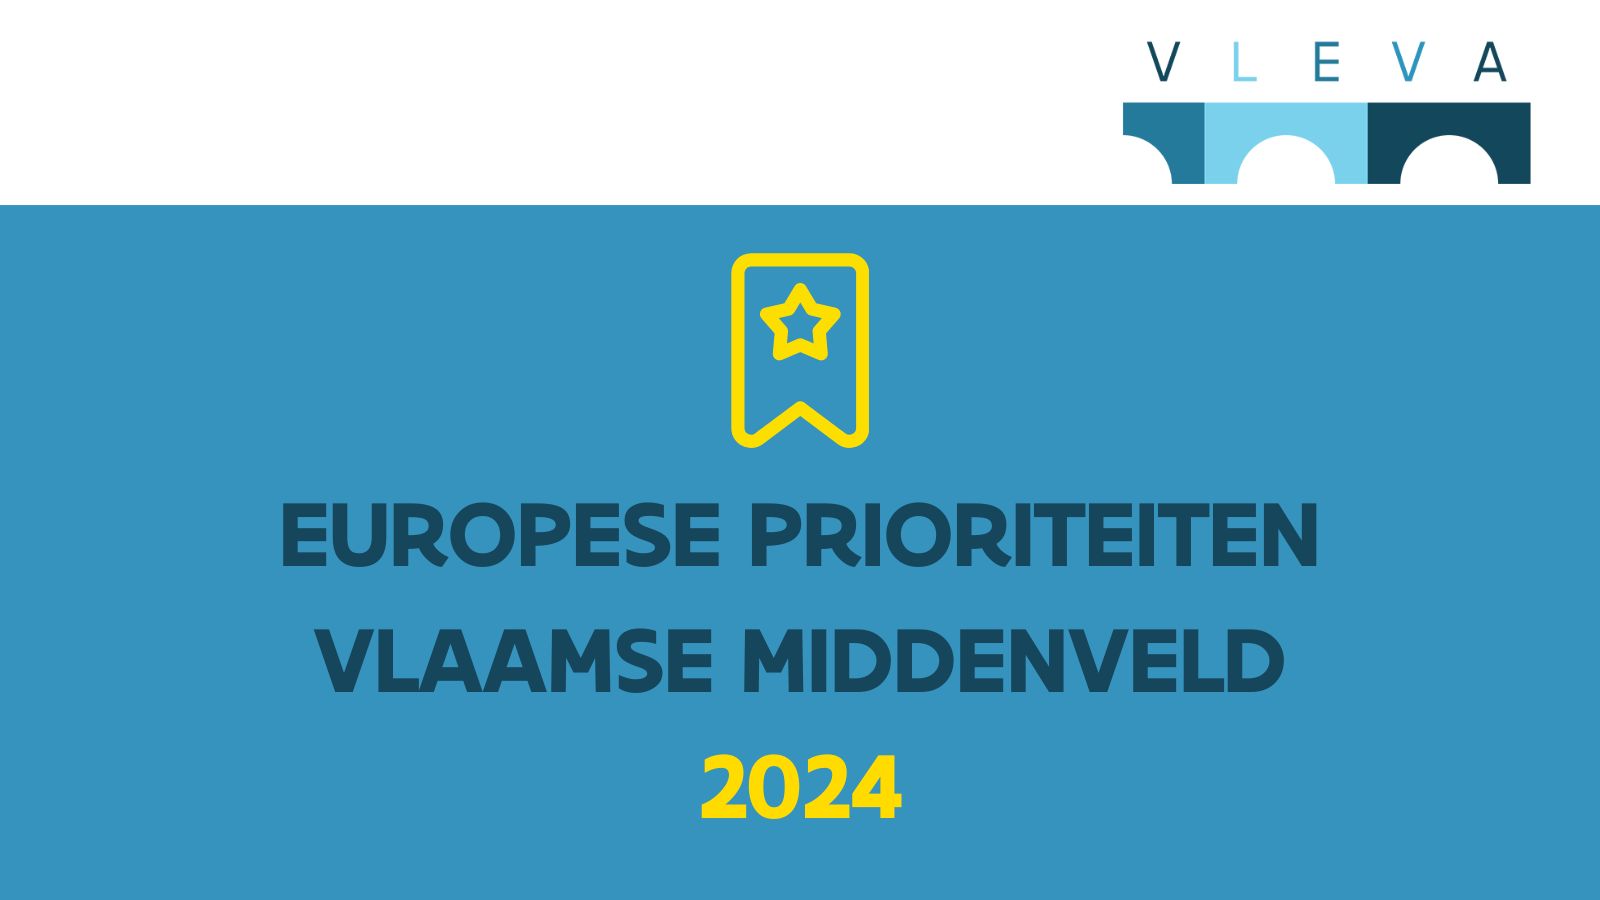 Europese prioriteiten voor 2024 van het Vlaamse middenveld